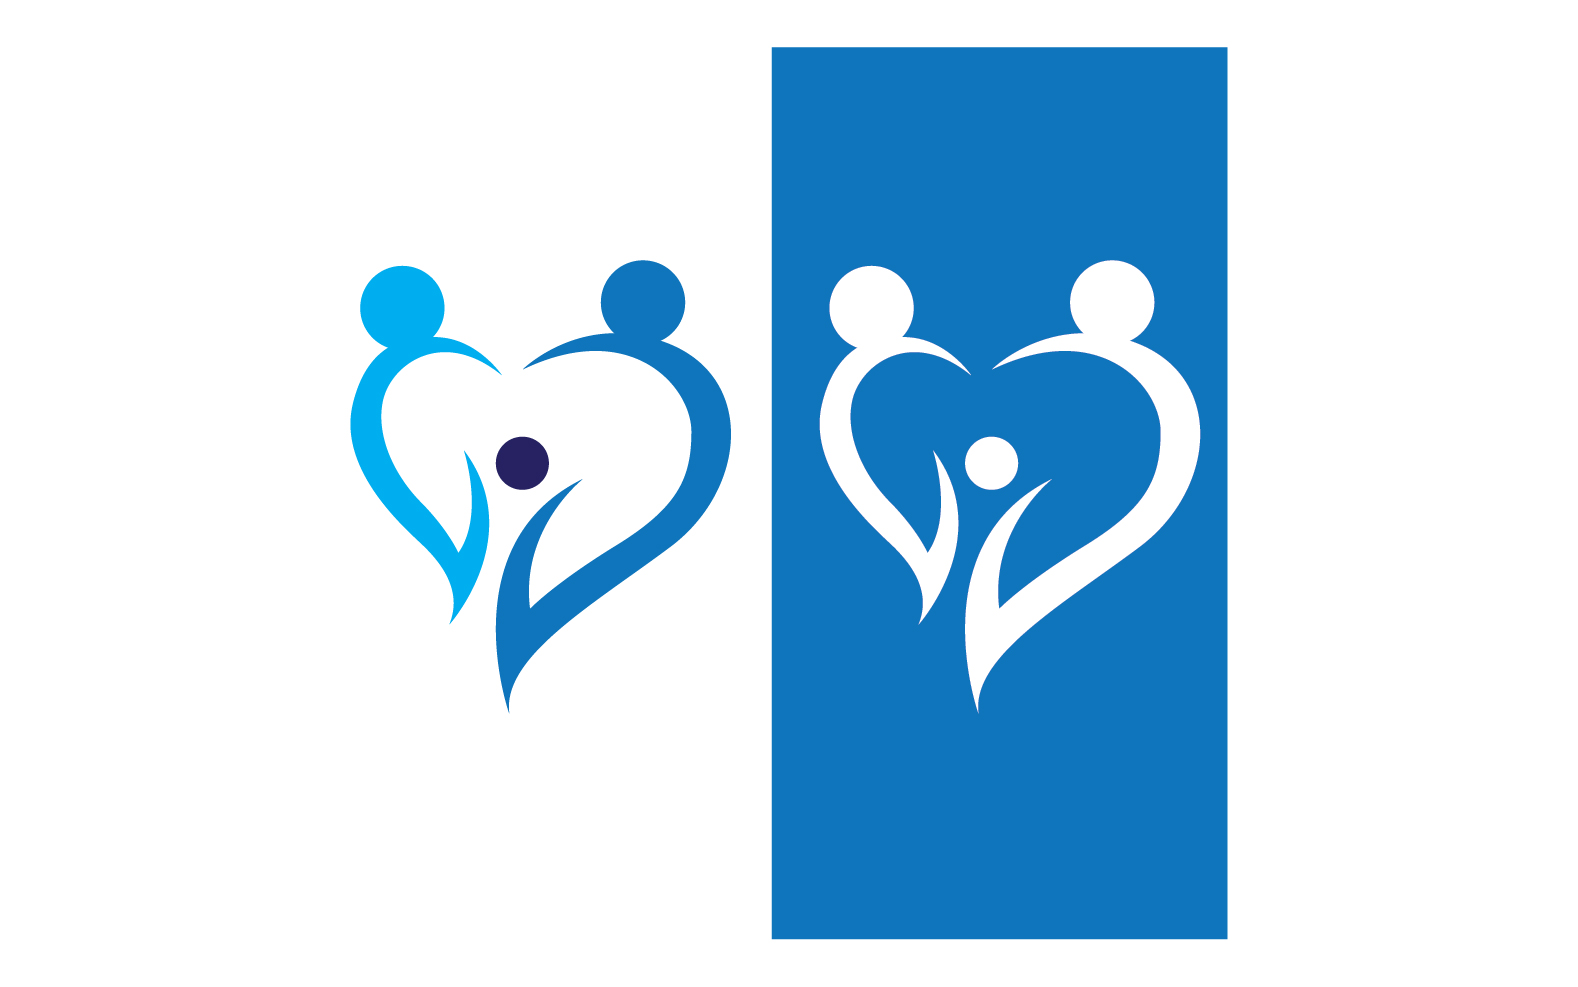 Adoption children family care logo health v14